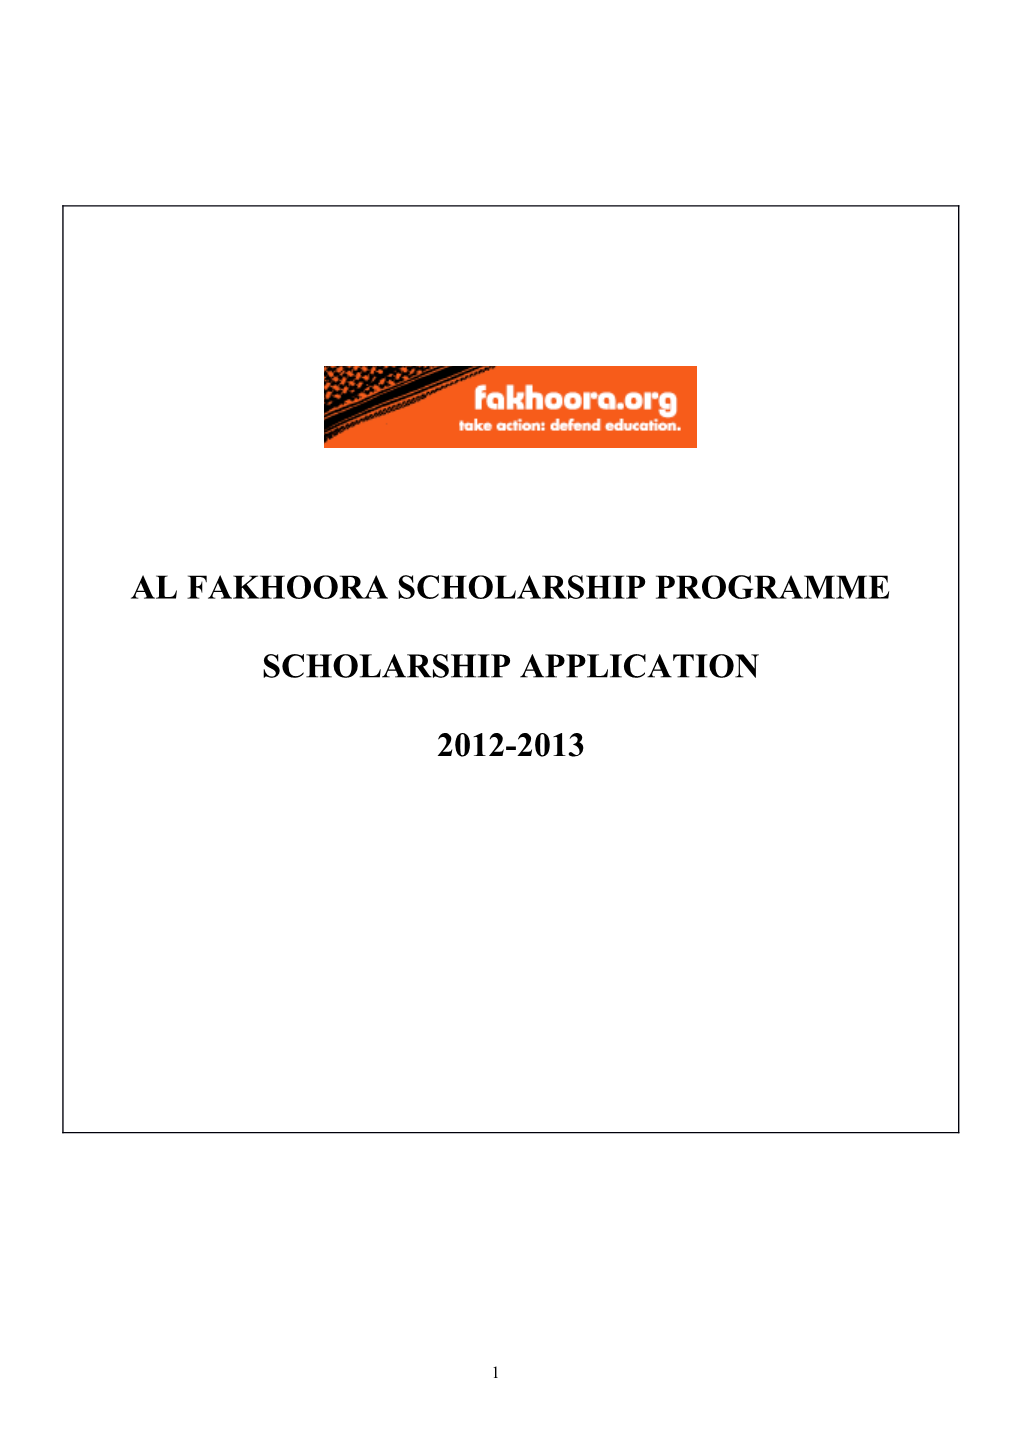 Al Fakhoora Scholarship Programme